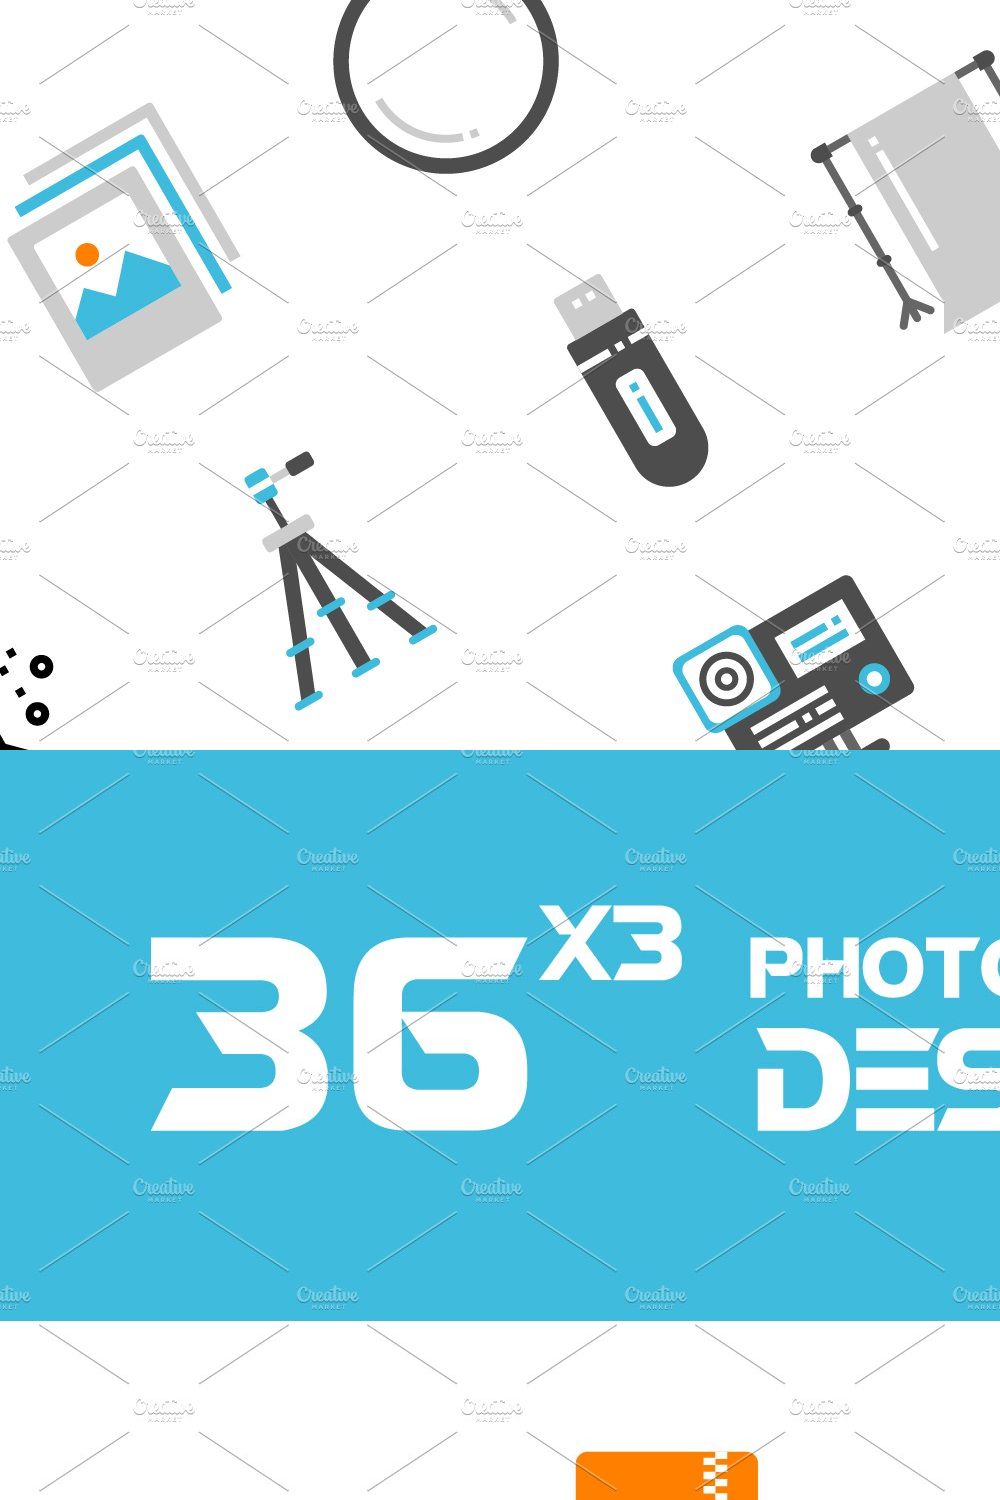 36x3 Photographer & Designer gadget pinterest preview image.